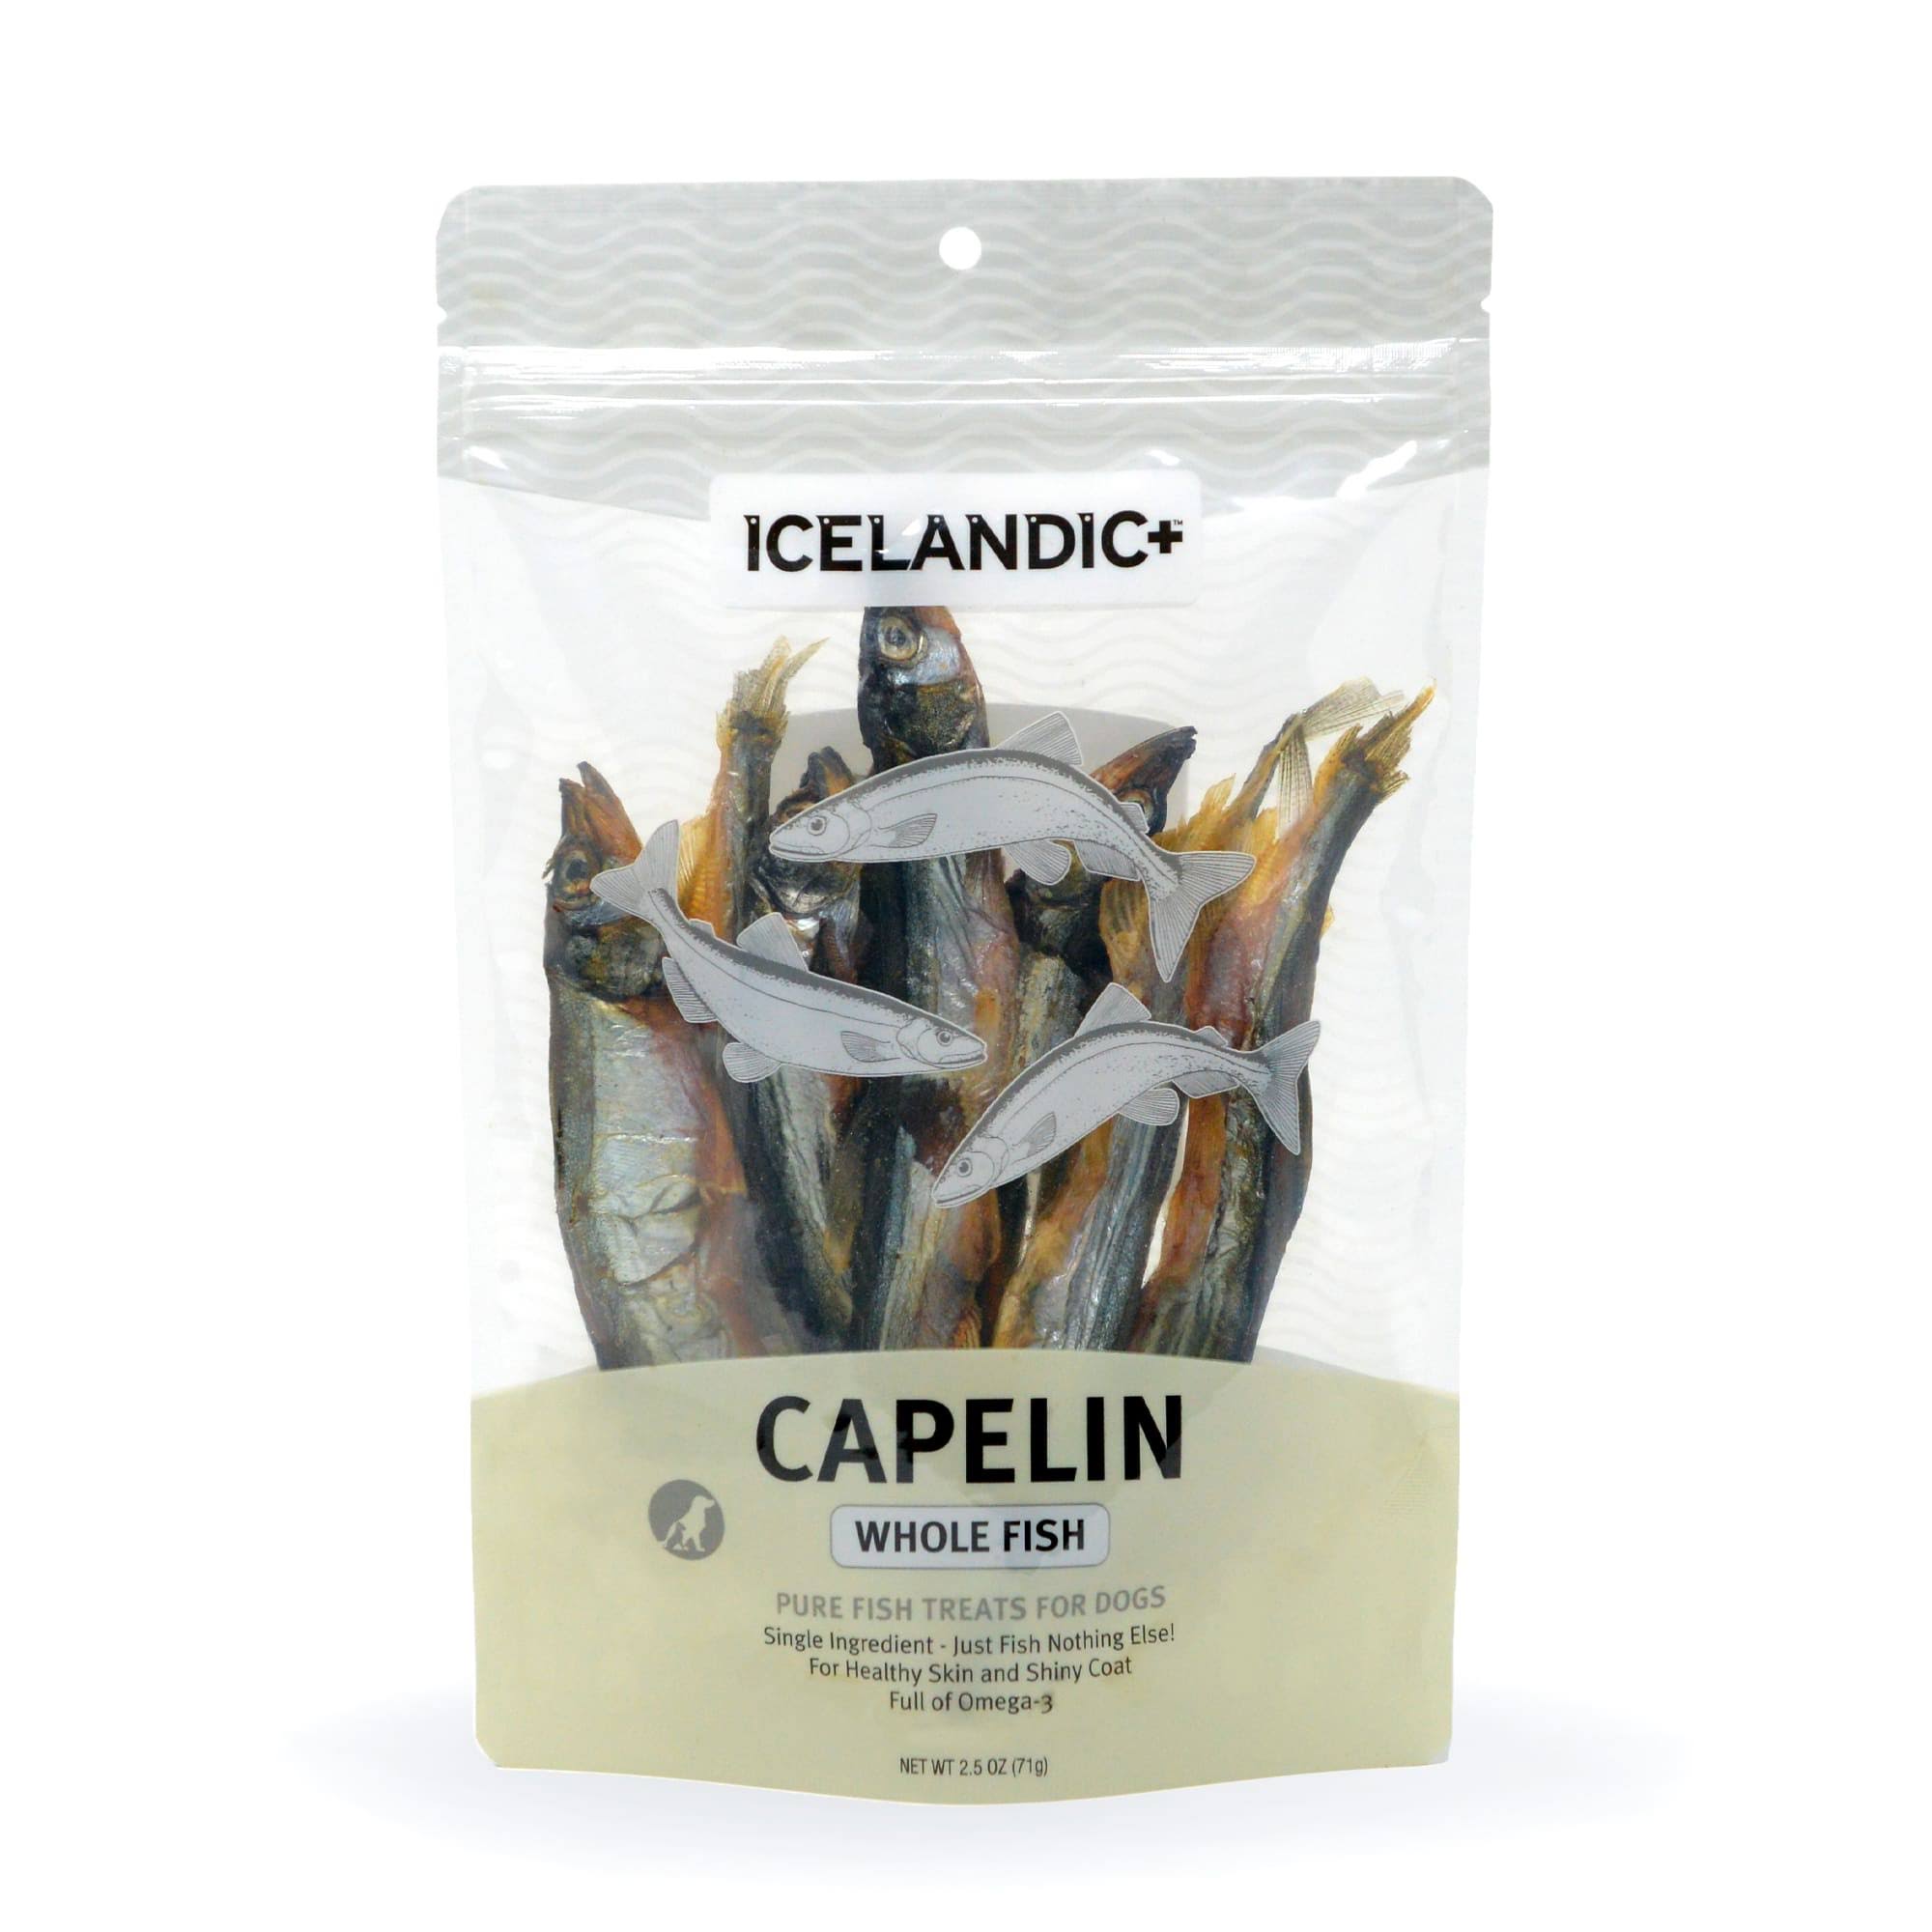 Icelandic+ Capelin Whole Fish Dog Treats - 2.5 oz